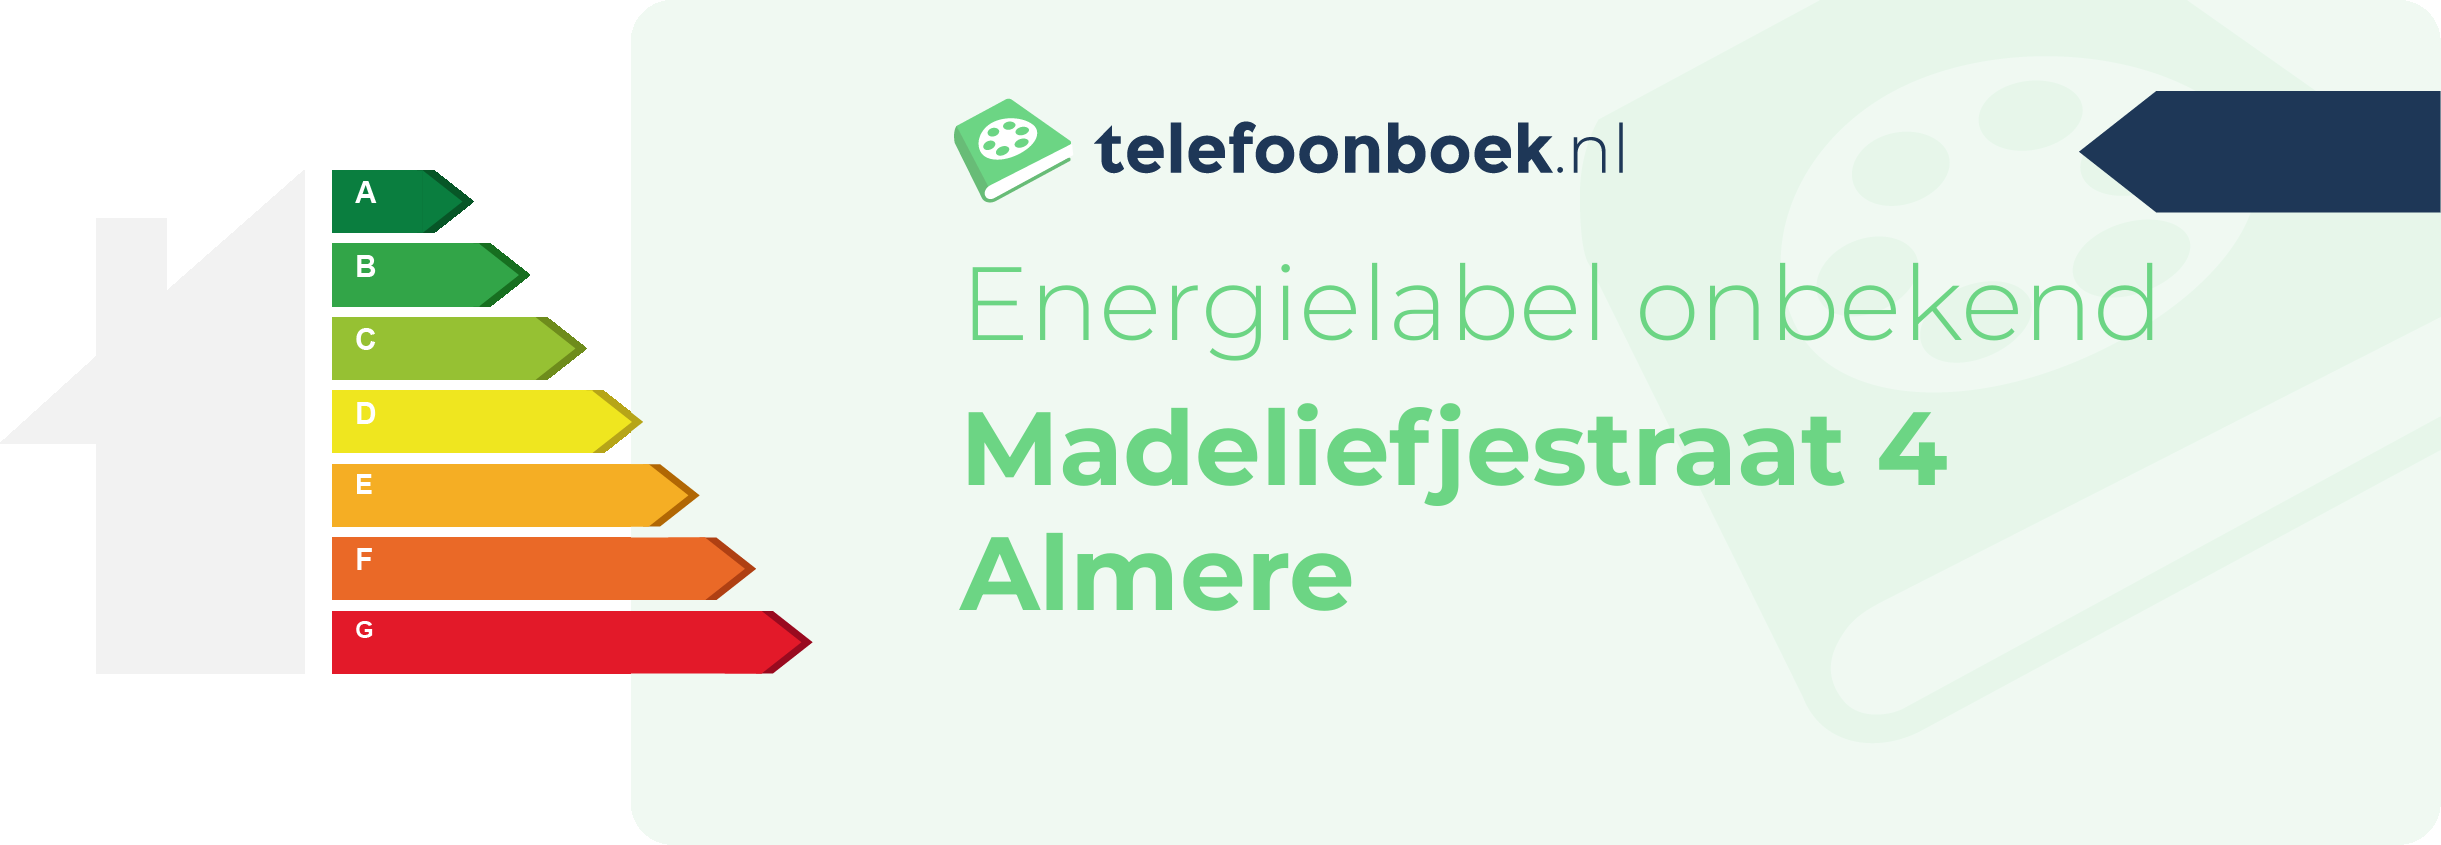 Energielabel Madeliefjestraat 4 Almere